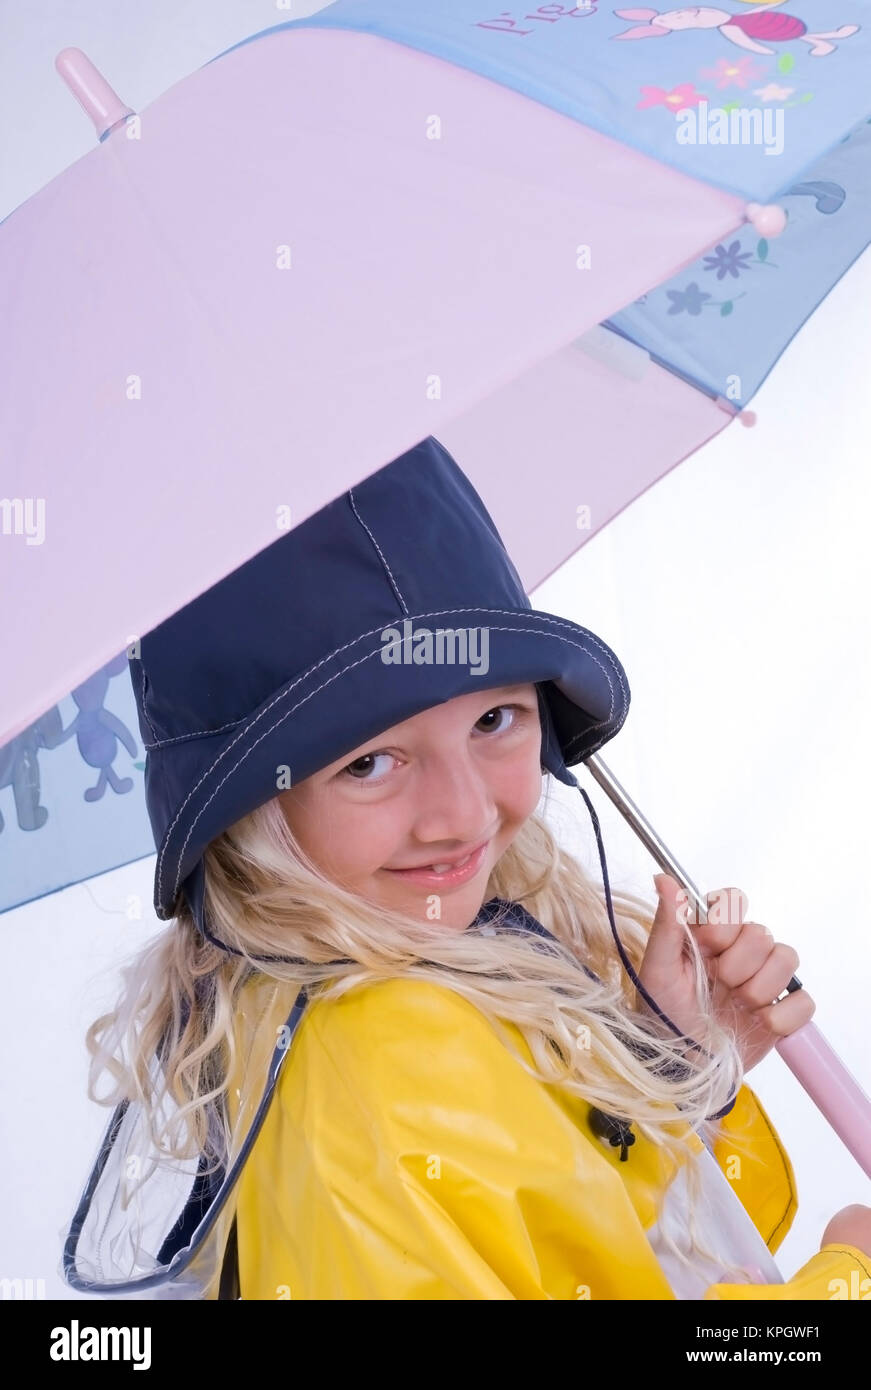 M ?dchen mit Regenschirm - Girl with umbrella Banque D'Images